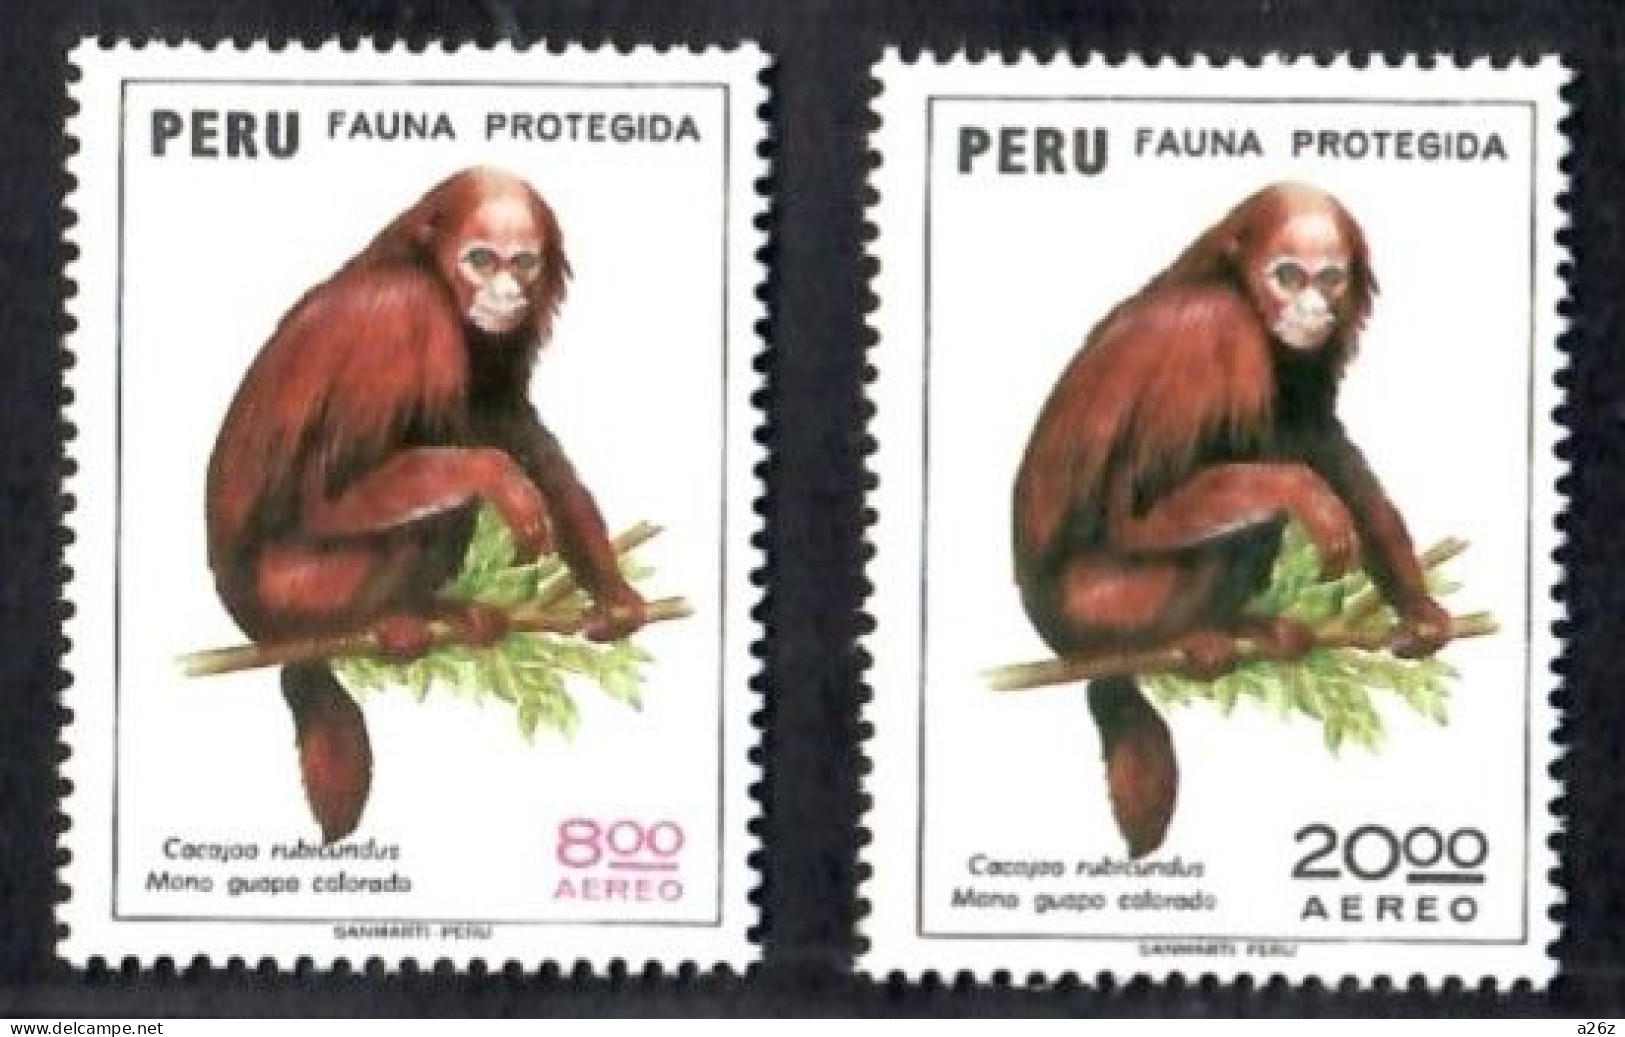 Peru 1974 Protected Animal Monkey Airmail 2V MNH - Peru